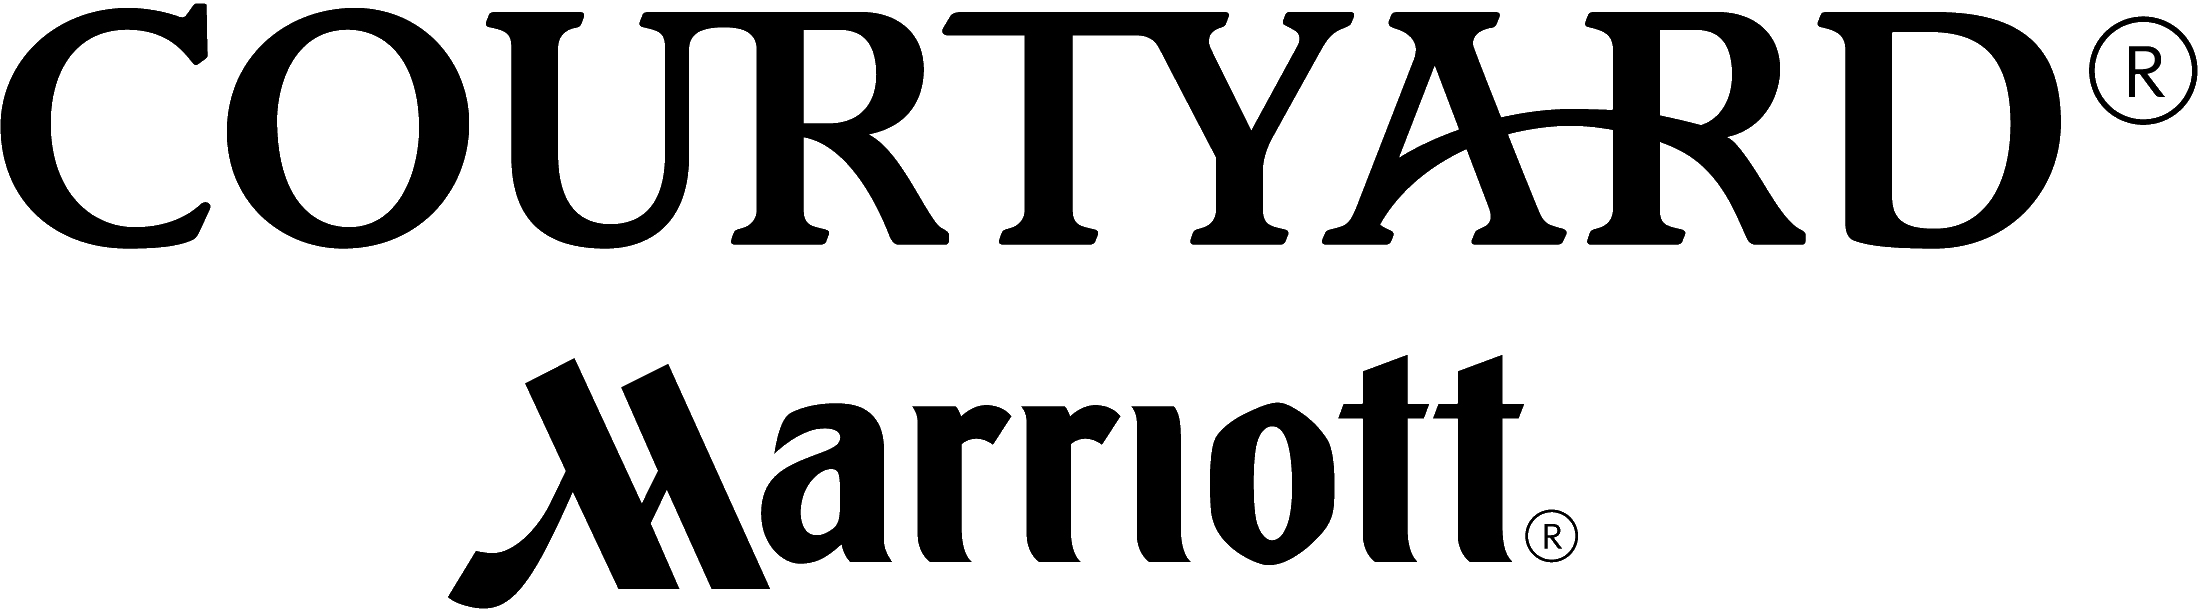 Courtyard Marriott logo (transparent) – Swan Lake Stables